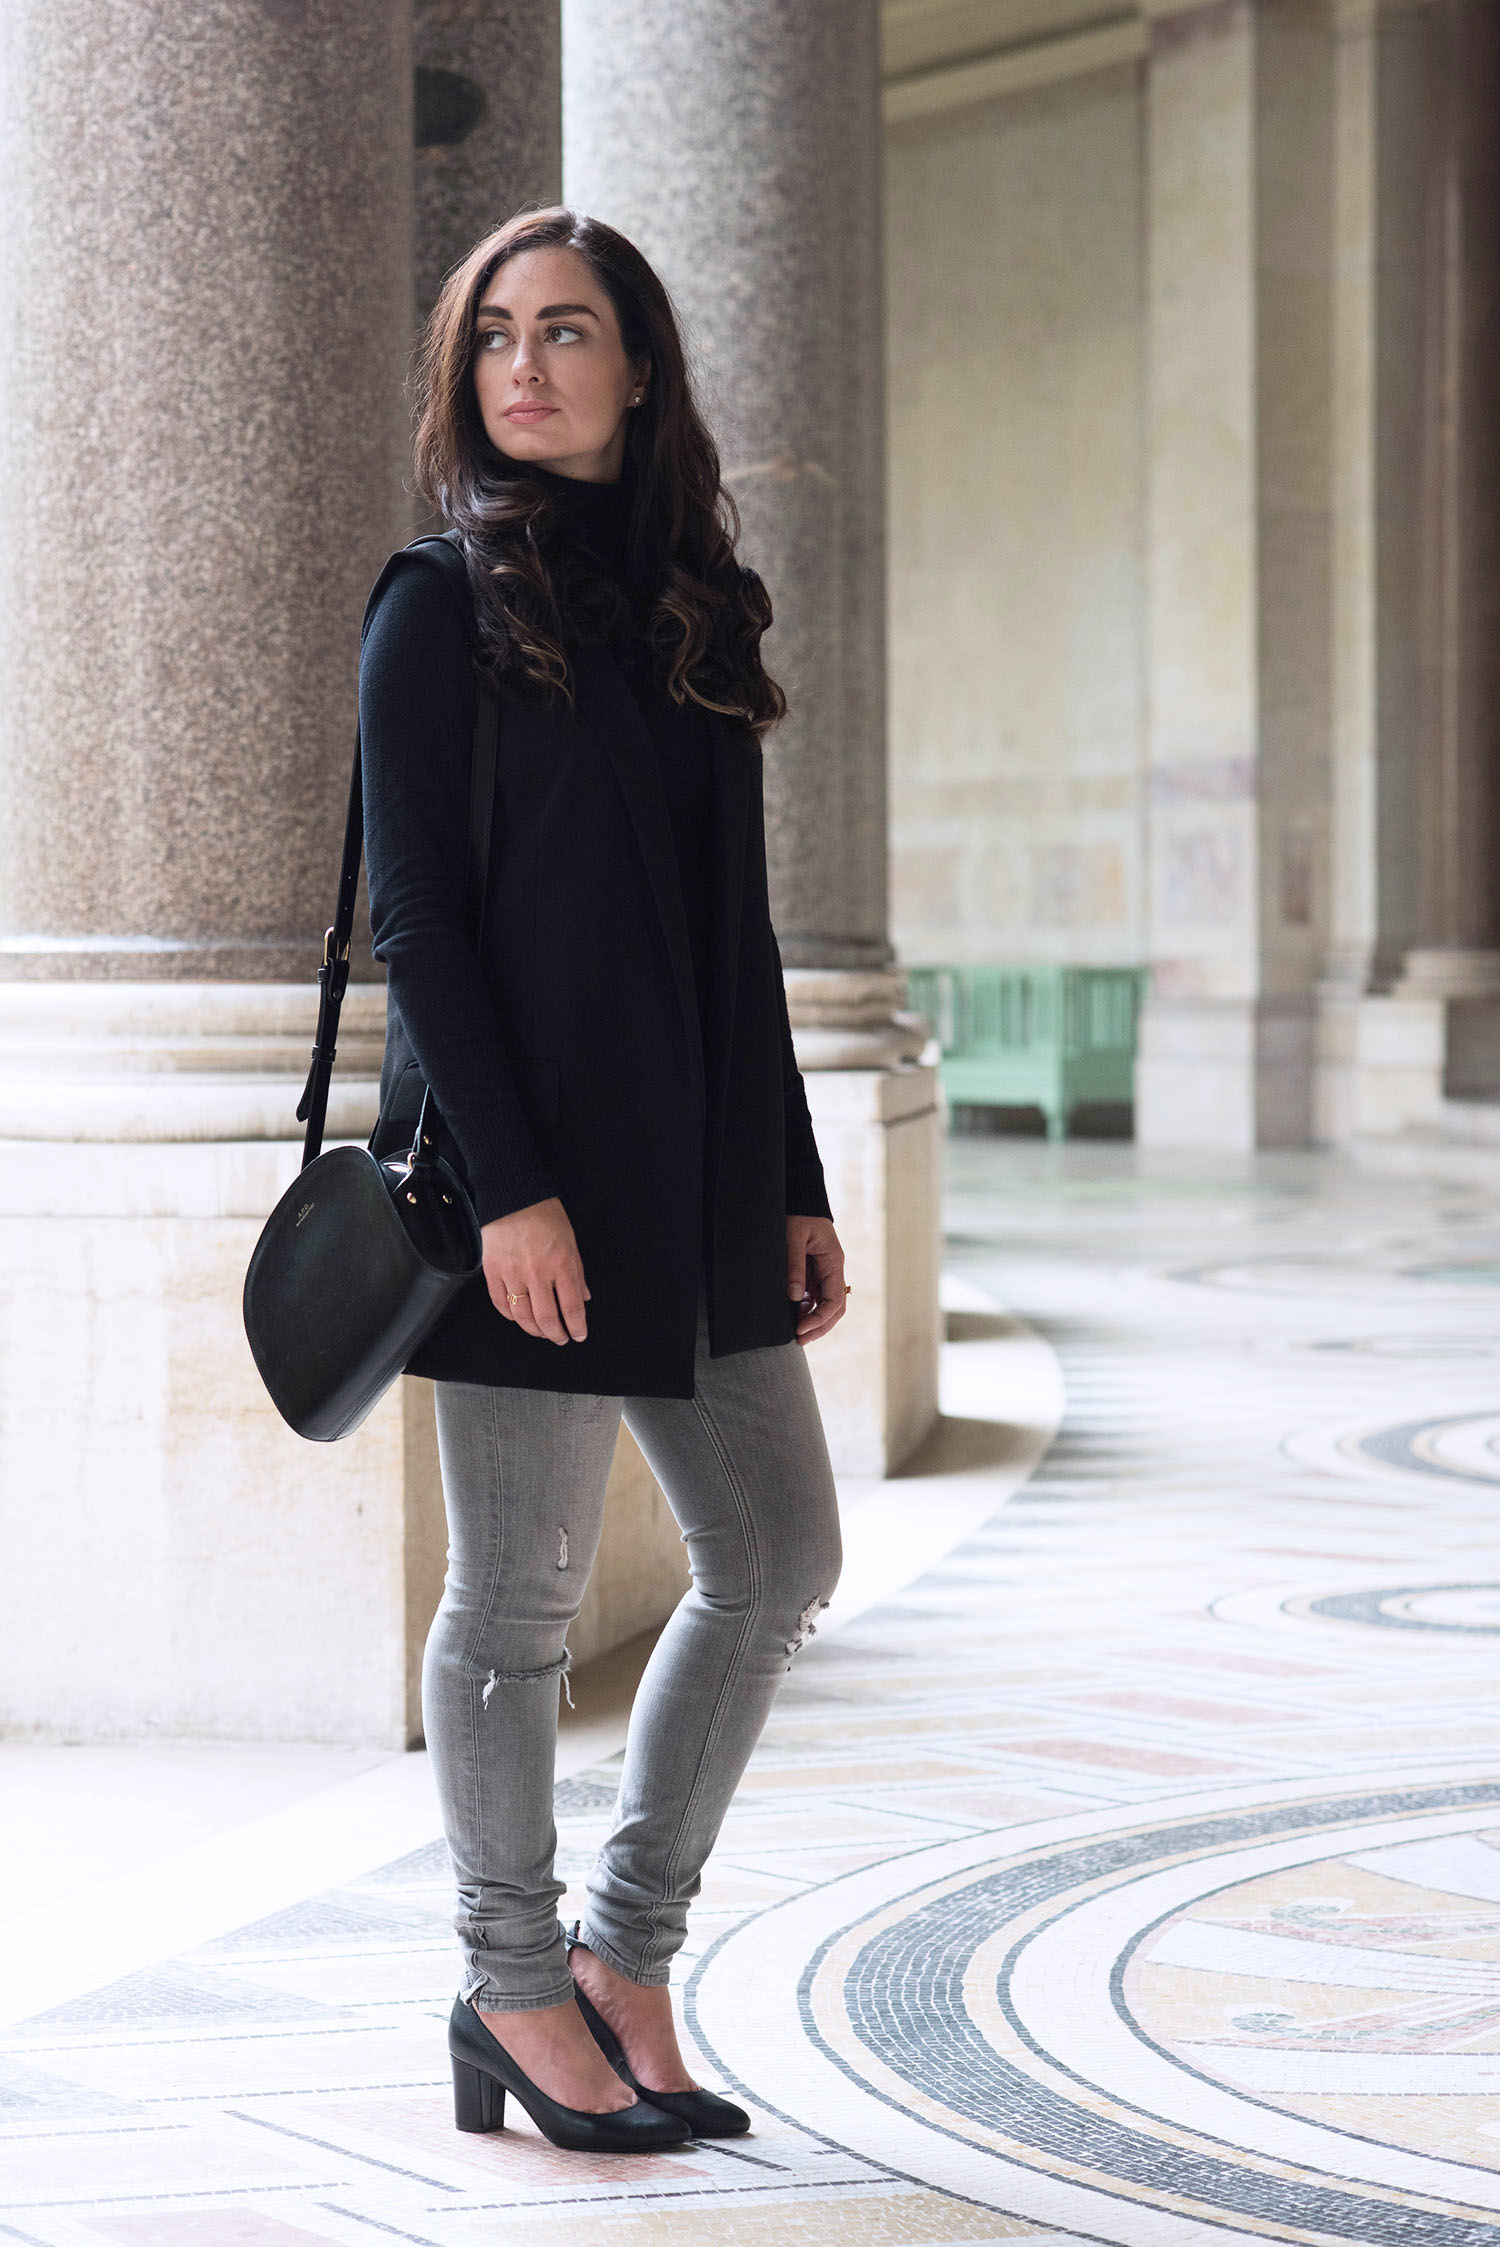 Style blogger Cee Fardoe of Coco & Vera at the Petit Palais in Paris wearing a black Zara waistcoat and carrying an APC half moon bag